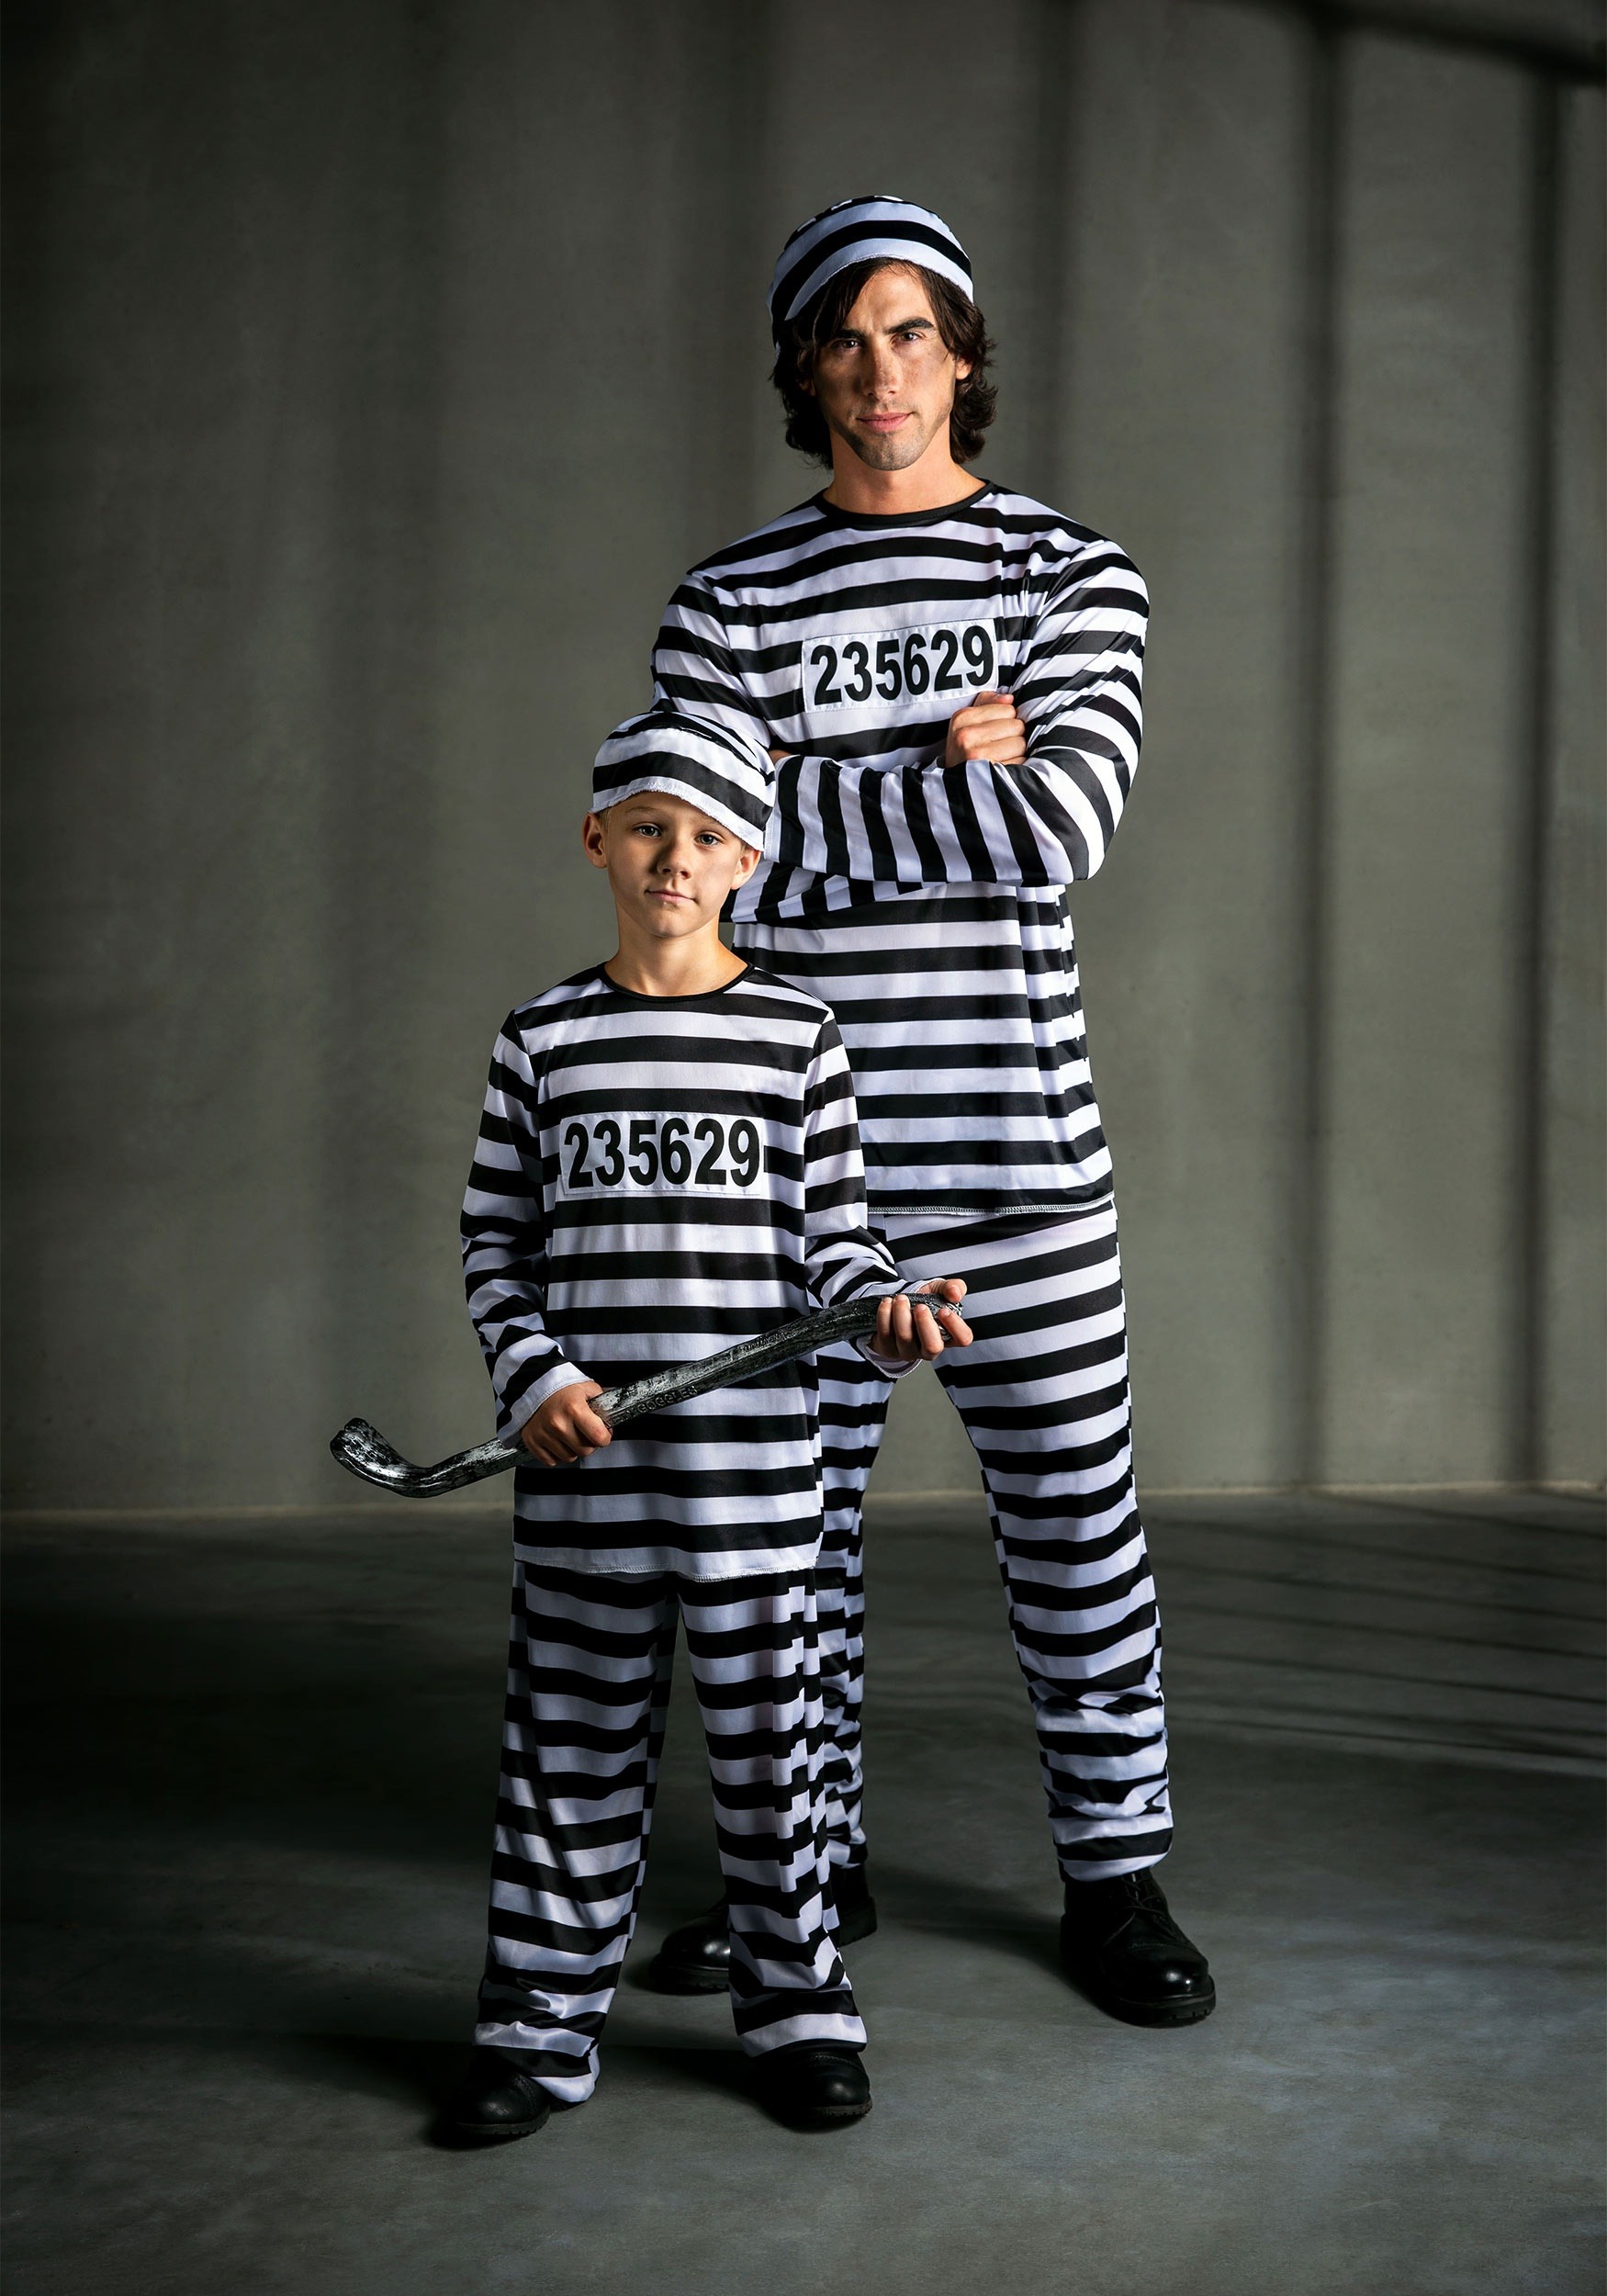 Plus Size Prisoner Costume for Men | Halloween Costume